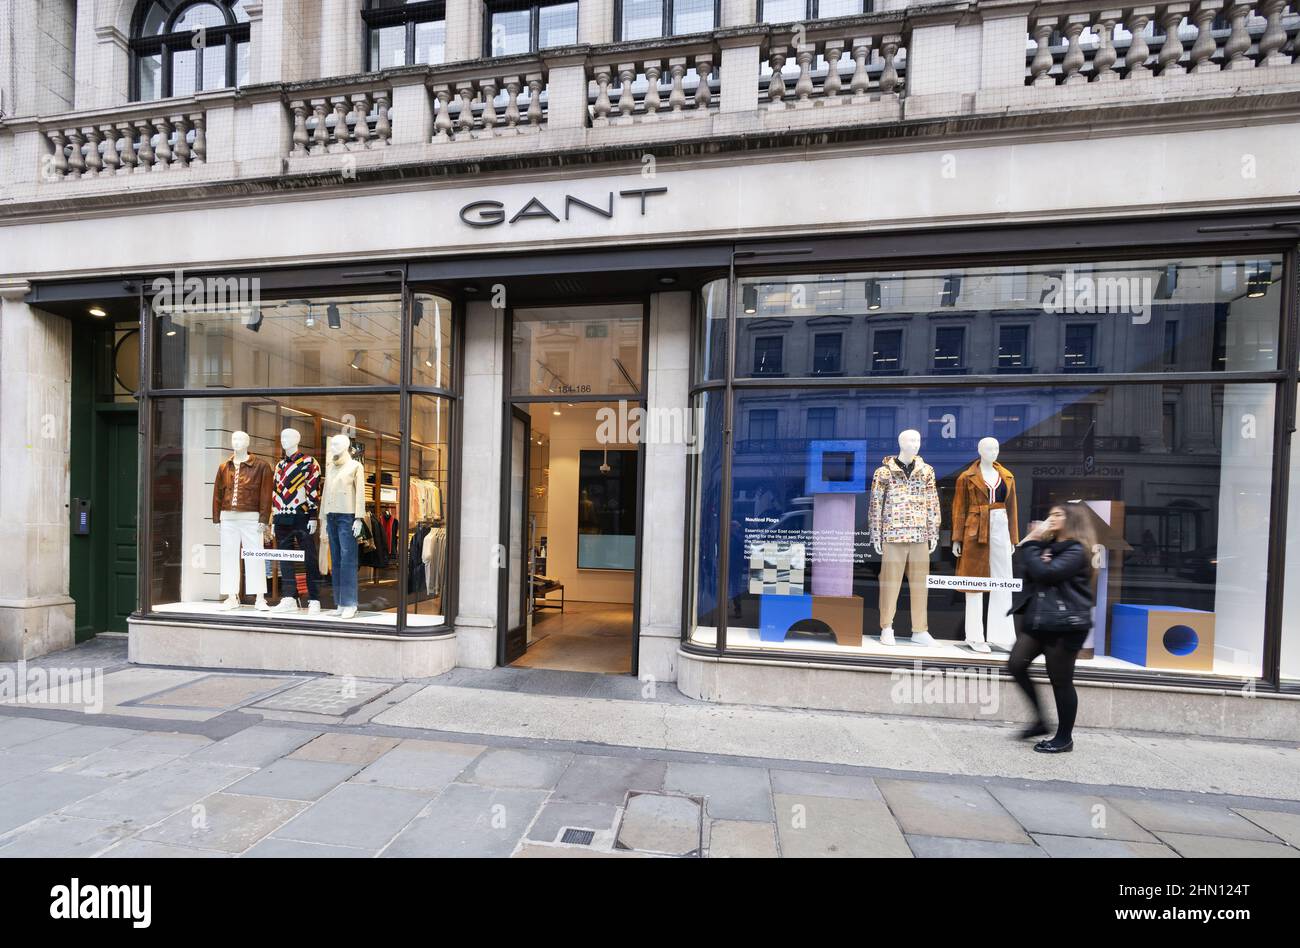 Gant store London - the exterior of the Gant shop - Gant clothing brand; Regent Street, London UK Stock Photo